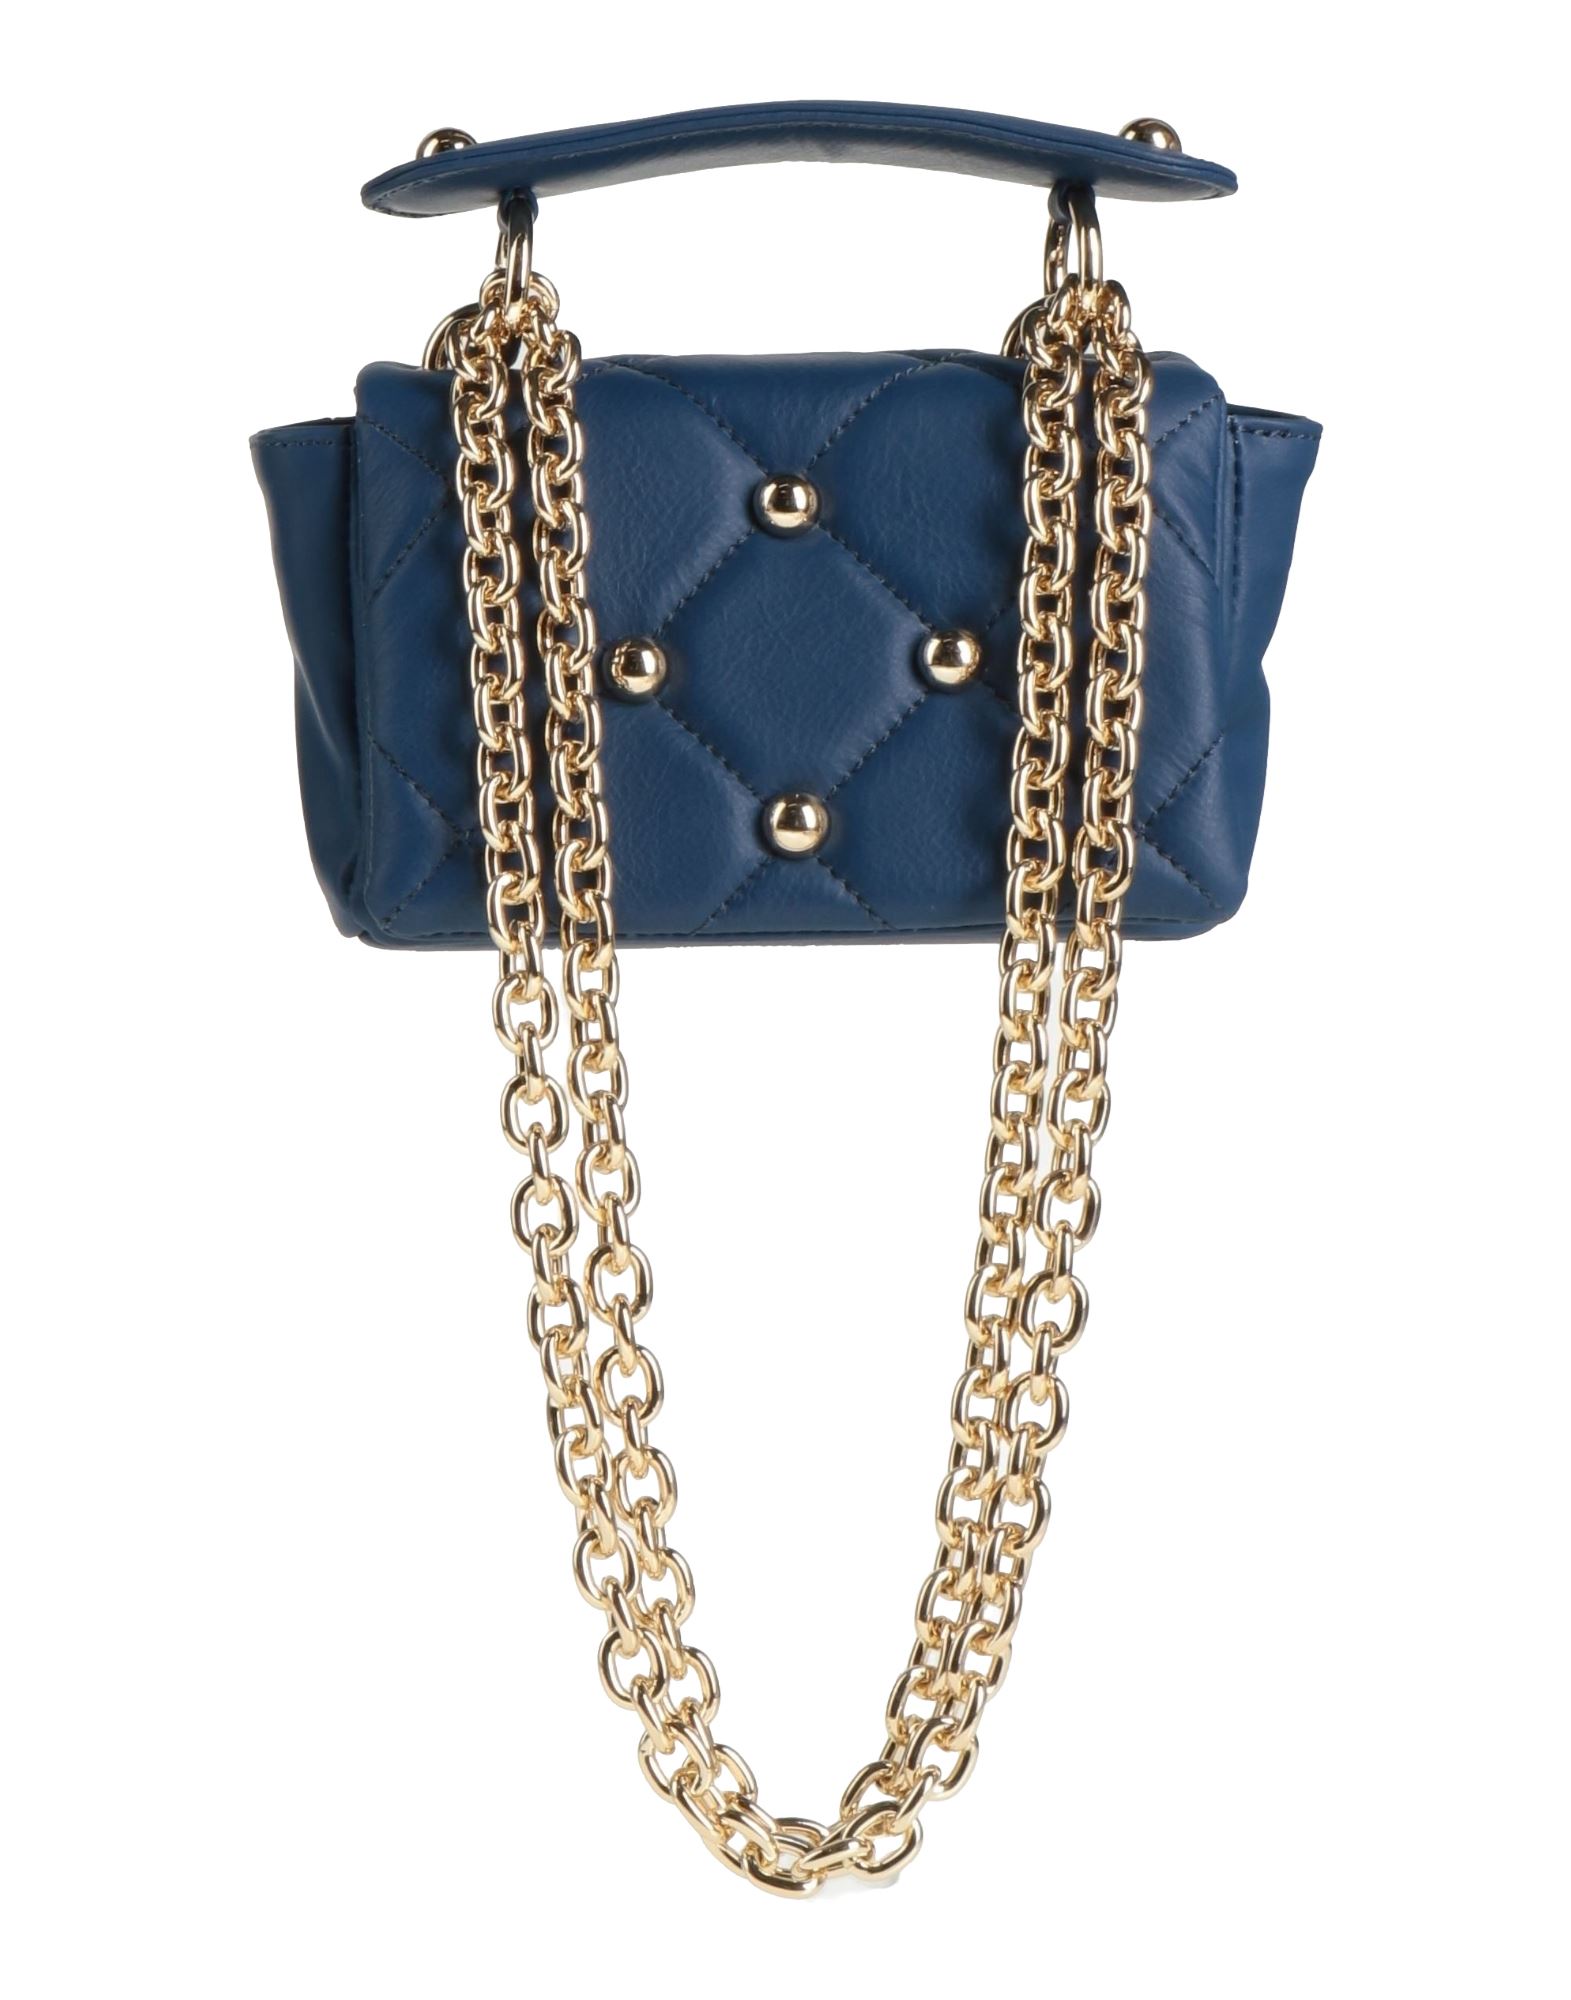 Ab Asia Bellucci Handbags In Navy Blue